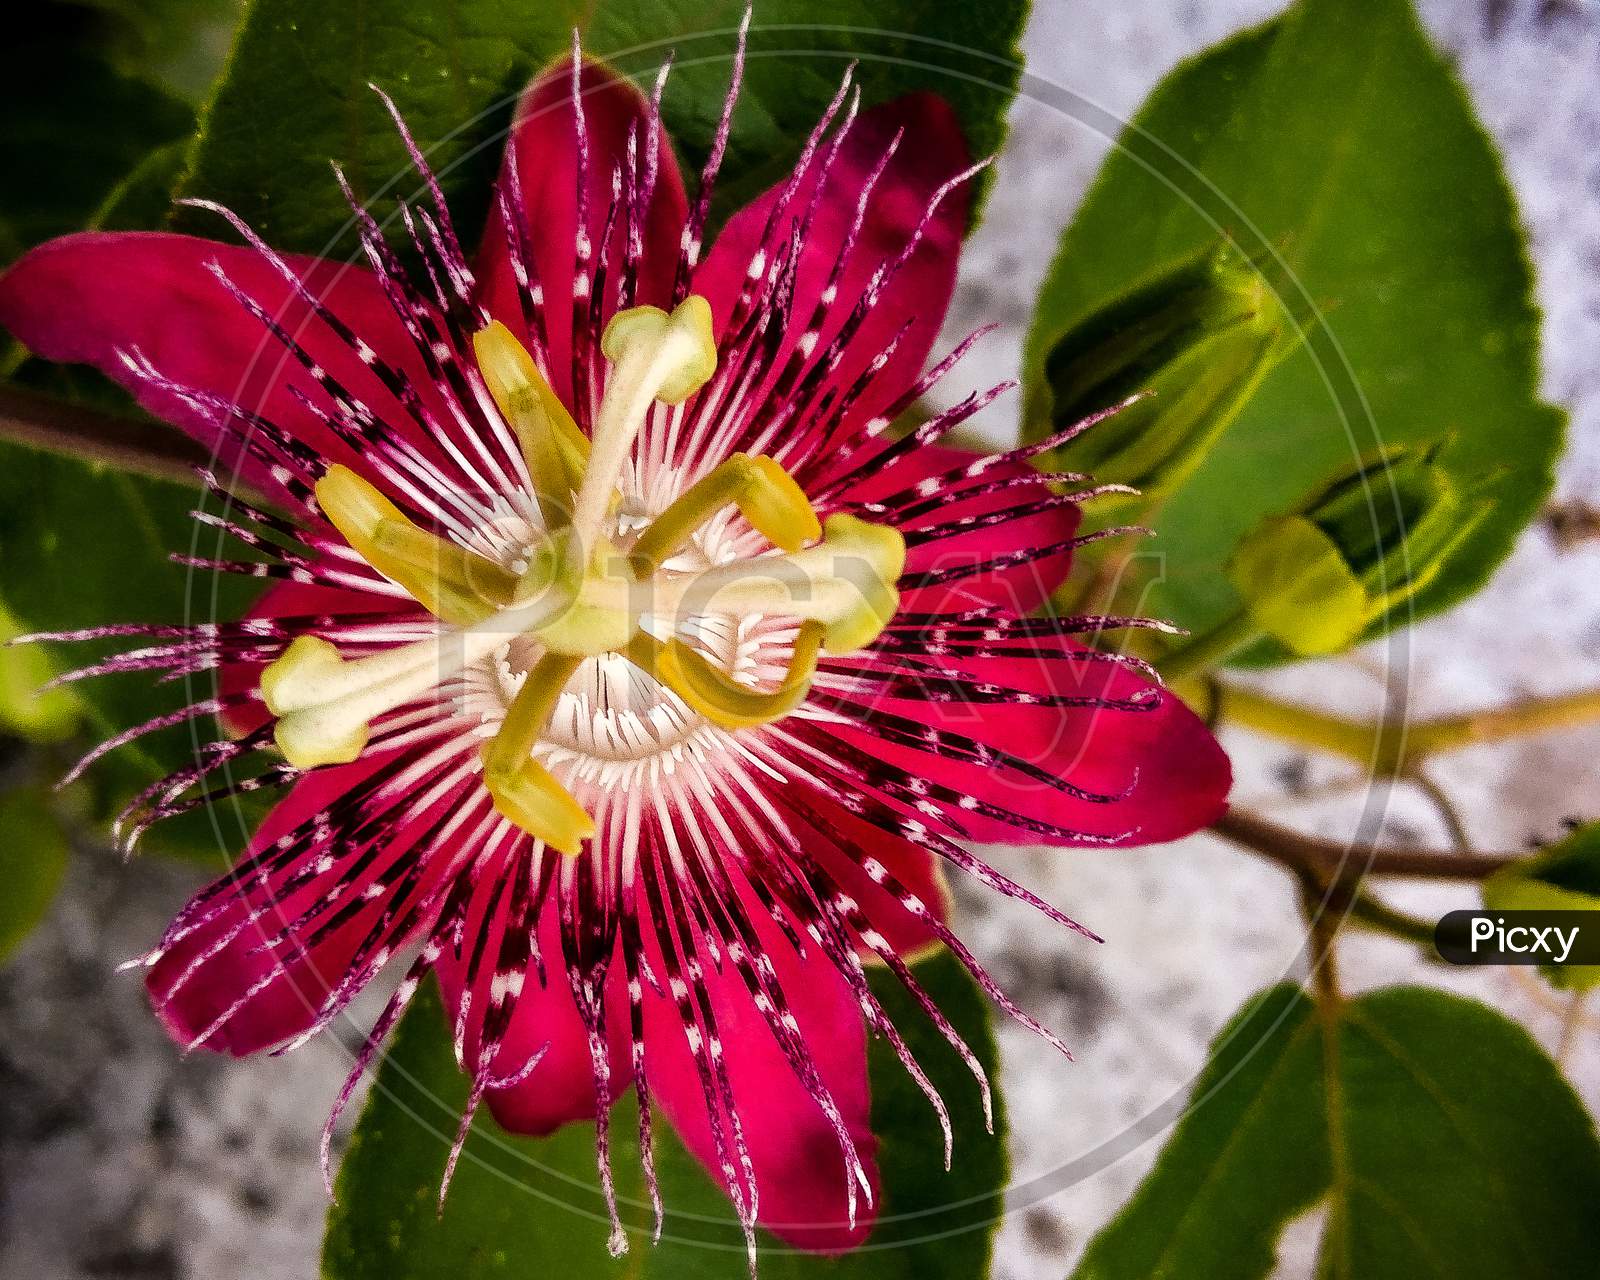 Passion fruit flower